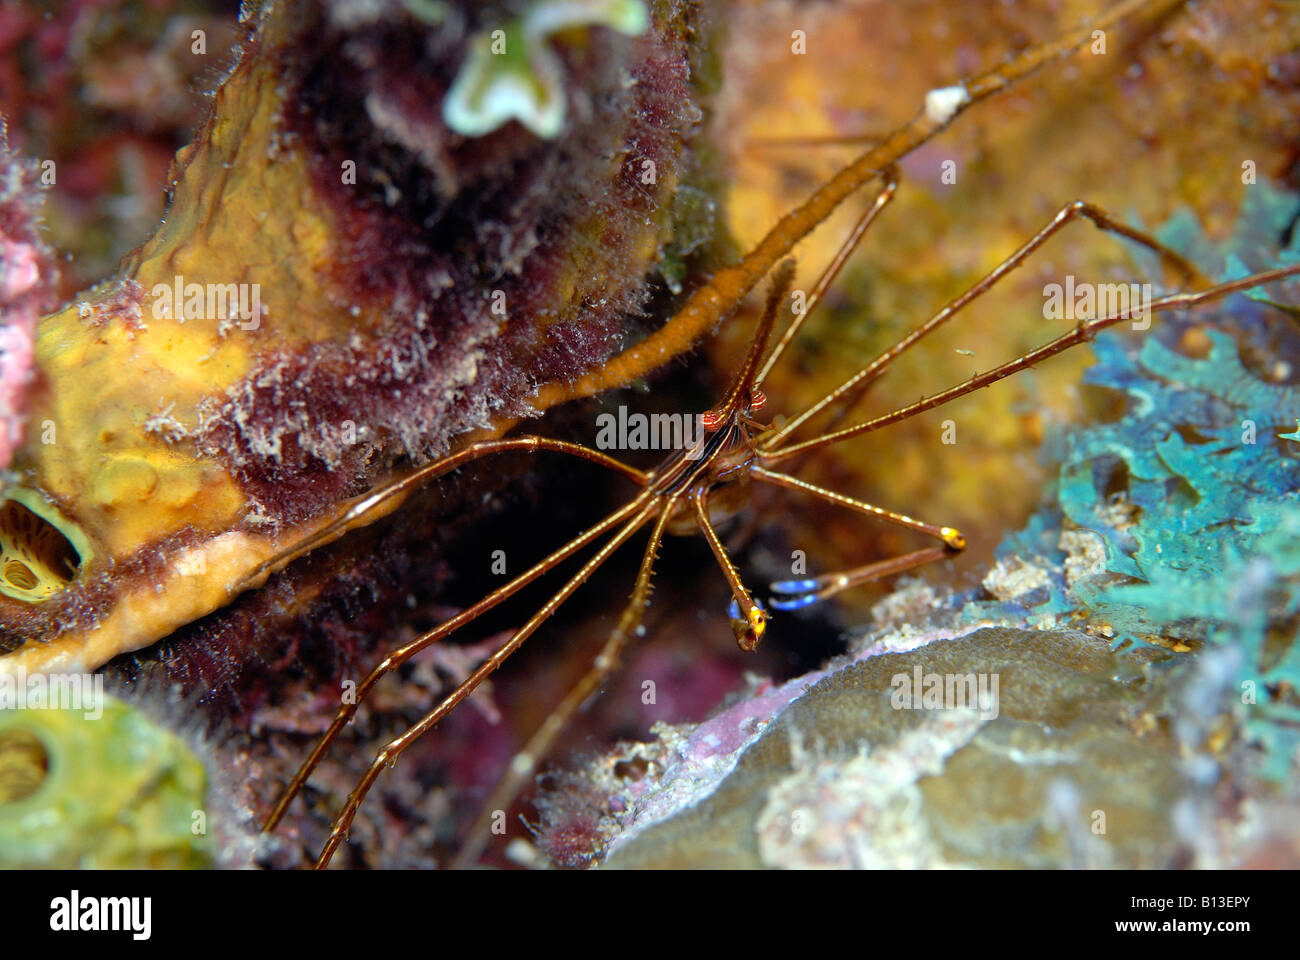 Arrow Crab Spider Crab Stenorhynchus seticornis Caribbean Sea Netherland Antilles Aruba Stock Photo